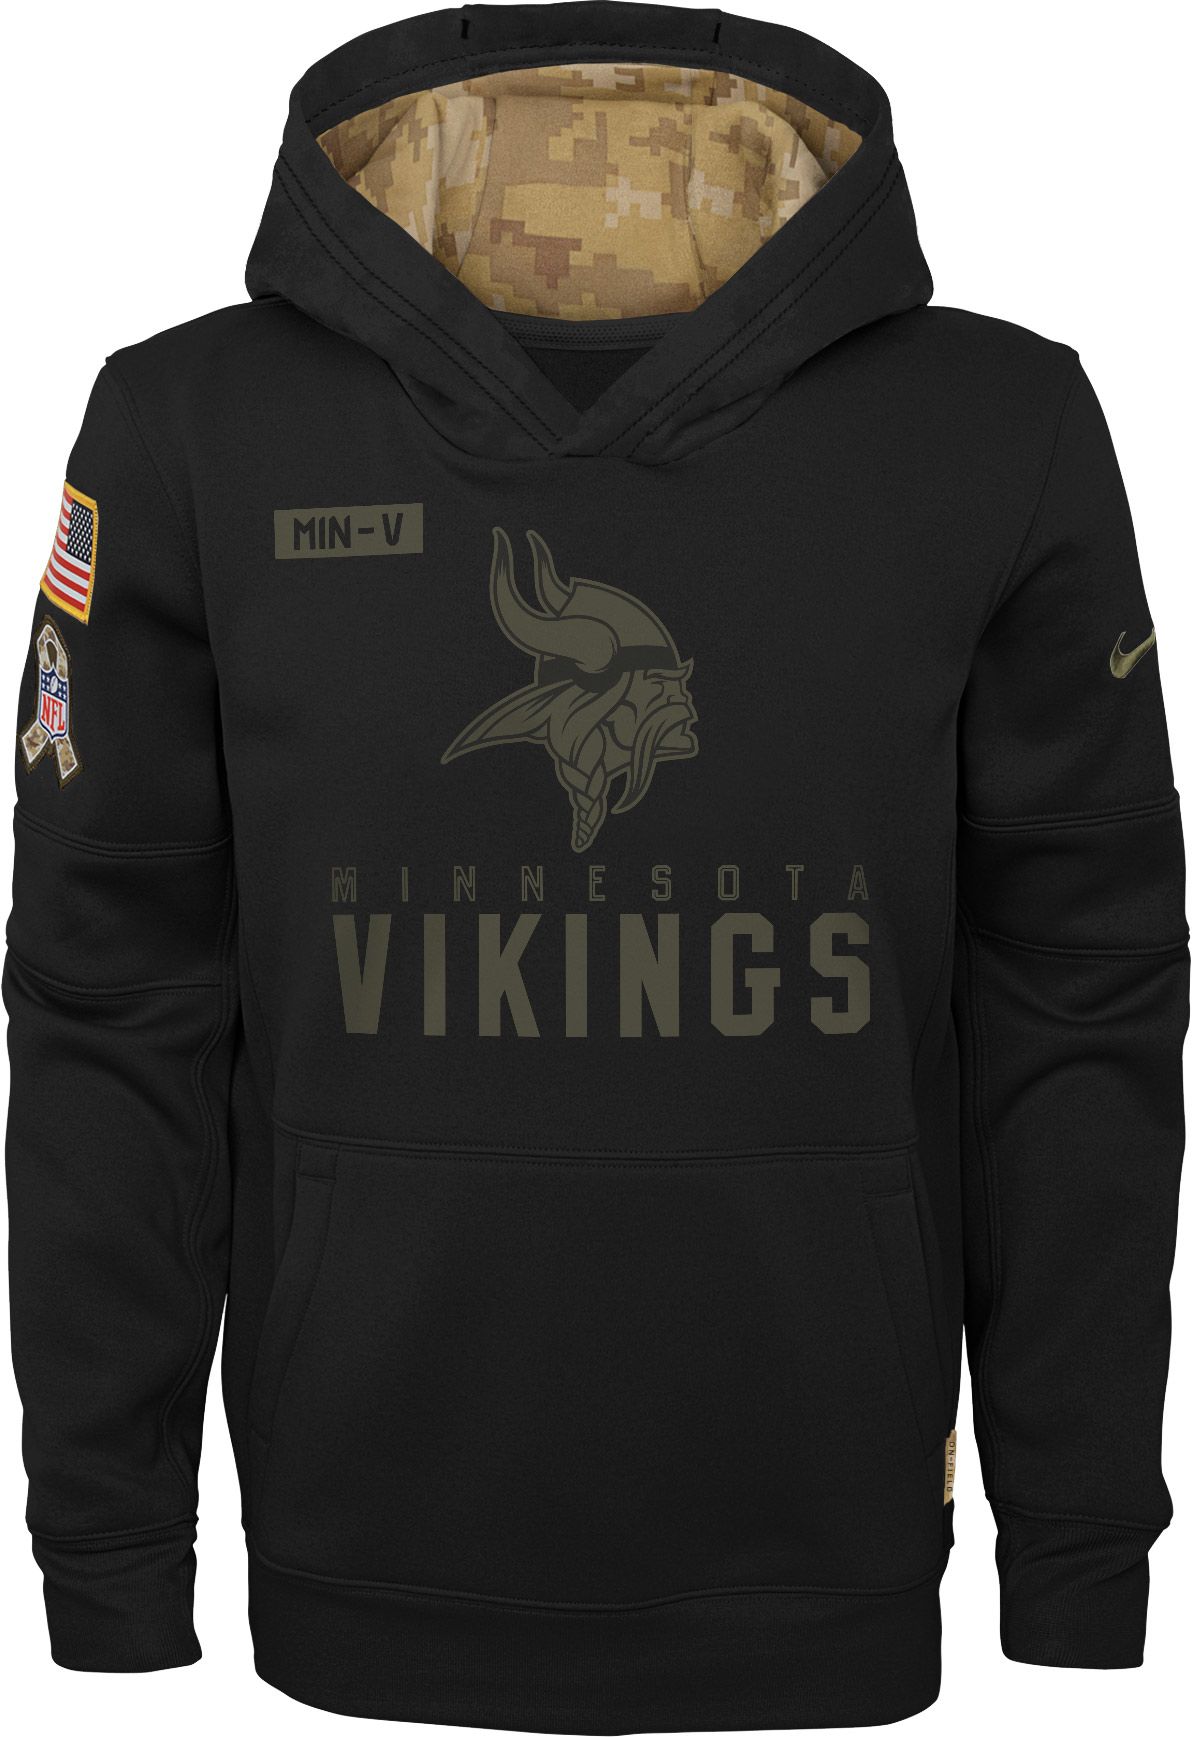 salute to service vikings sweatshirt